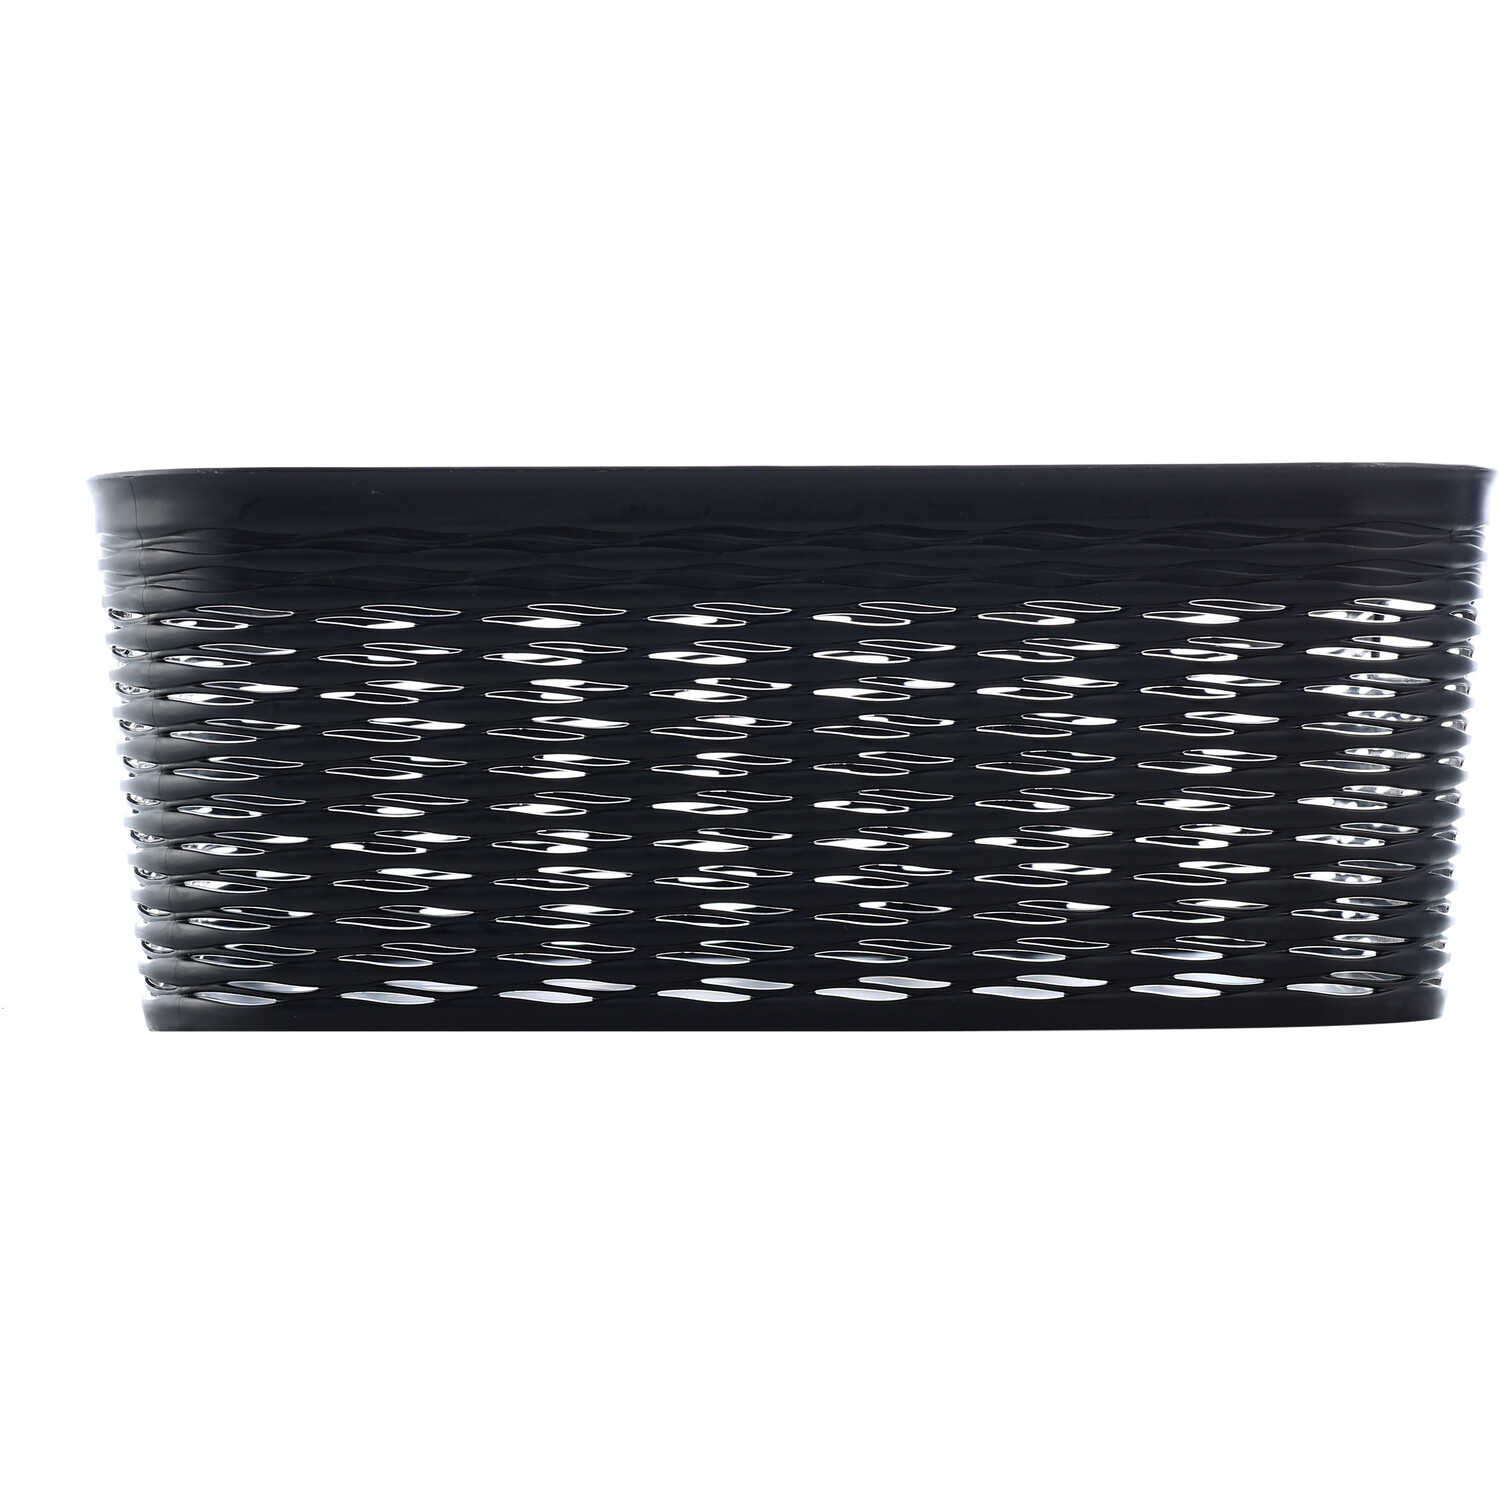 11L Black Wave Laundry Basket Image 2